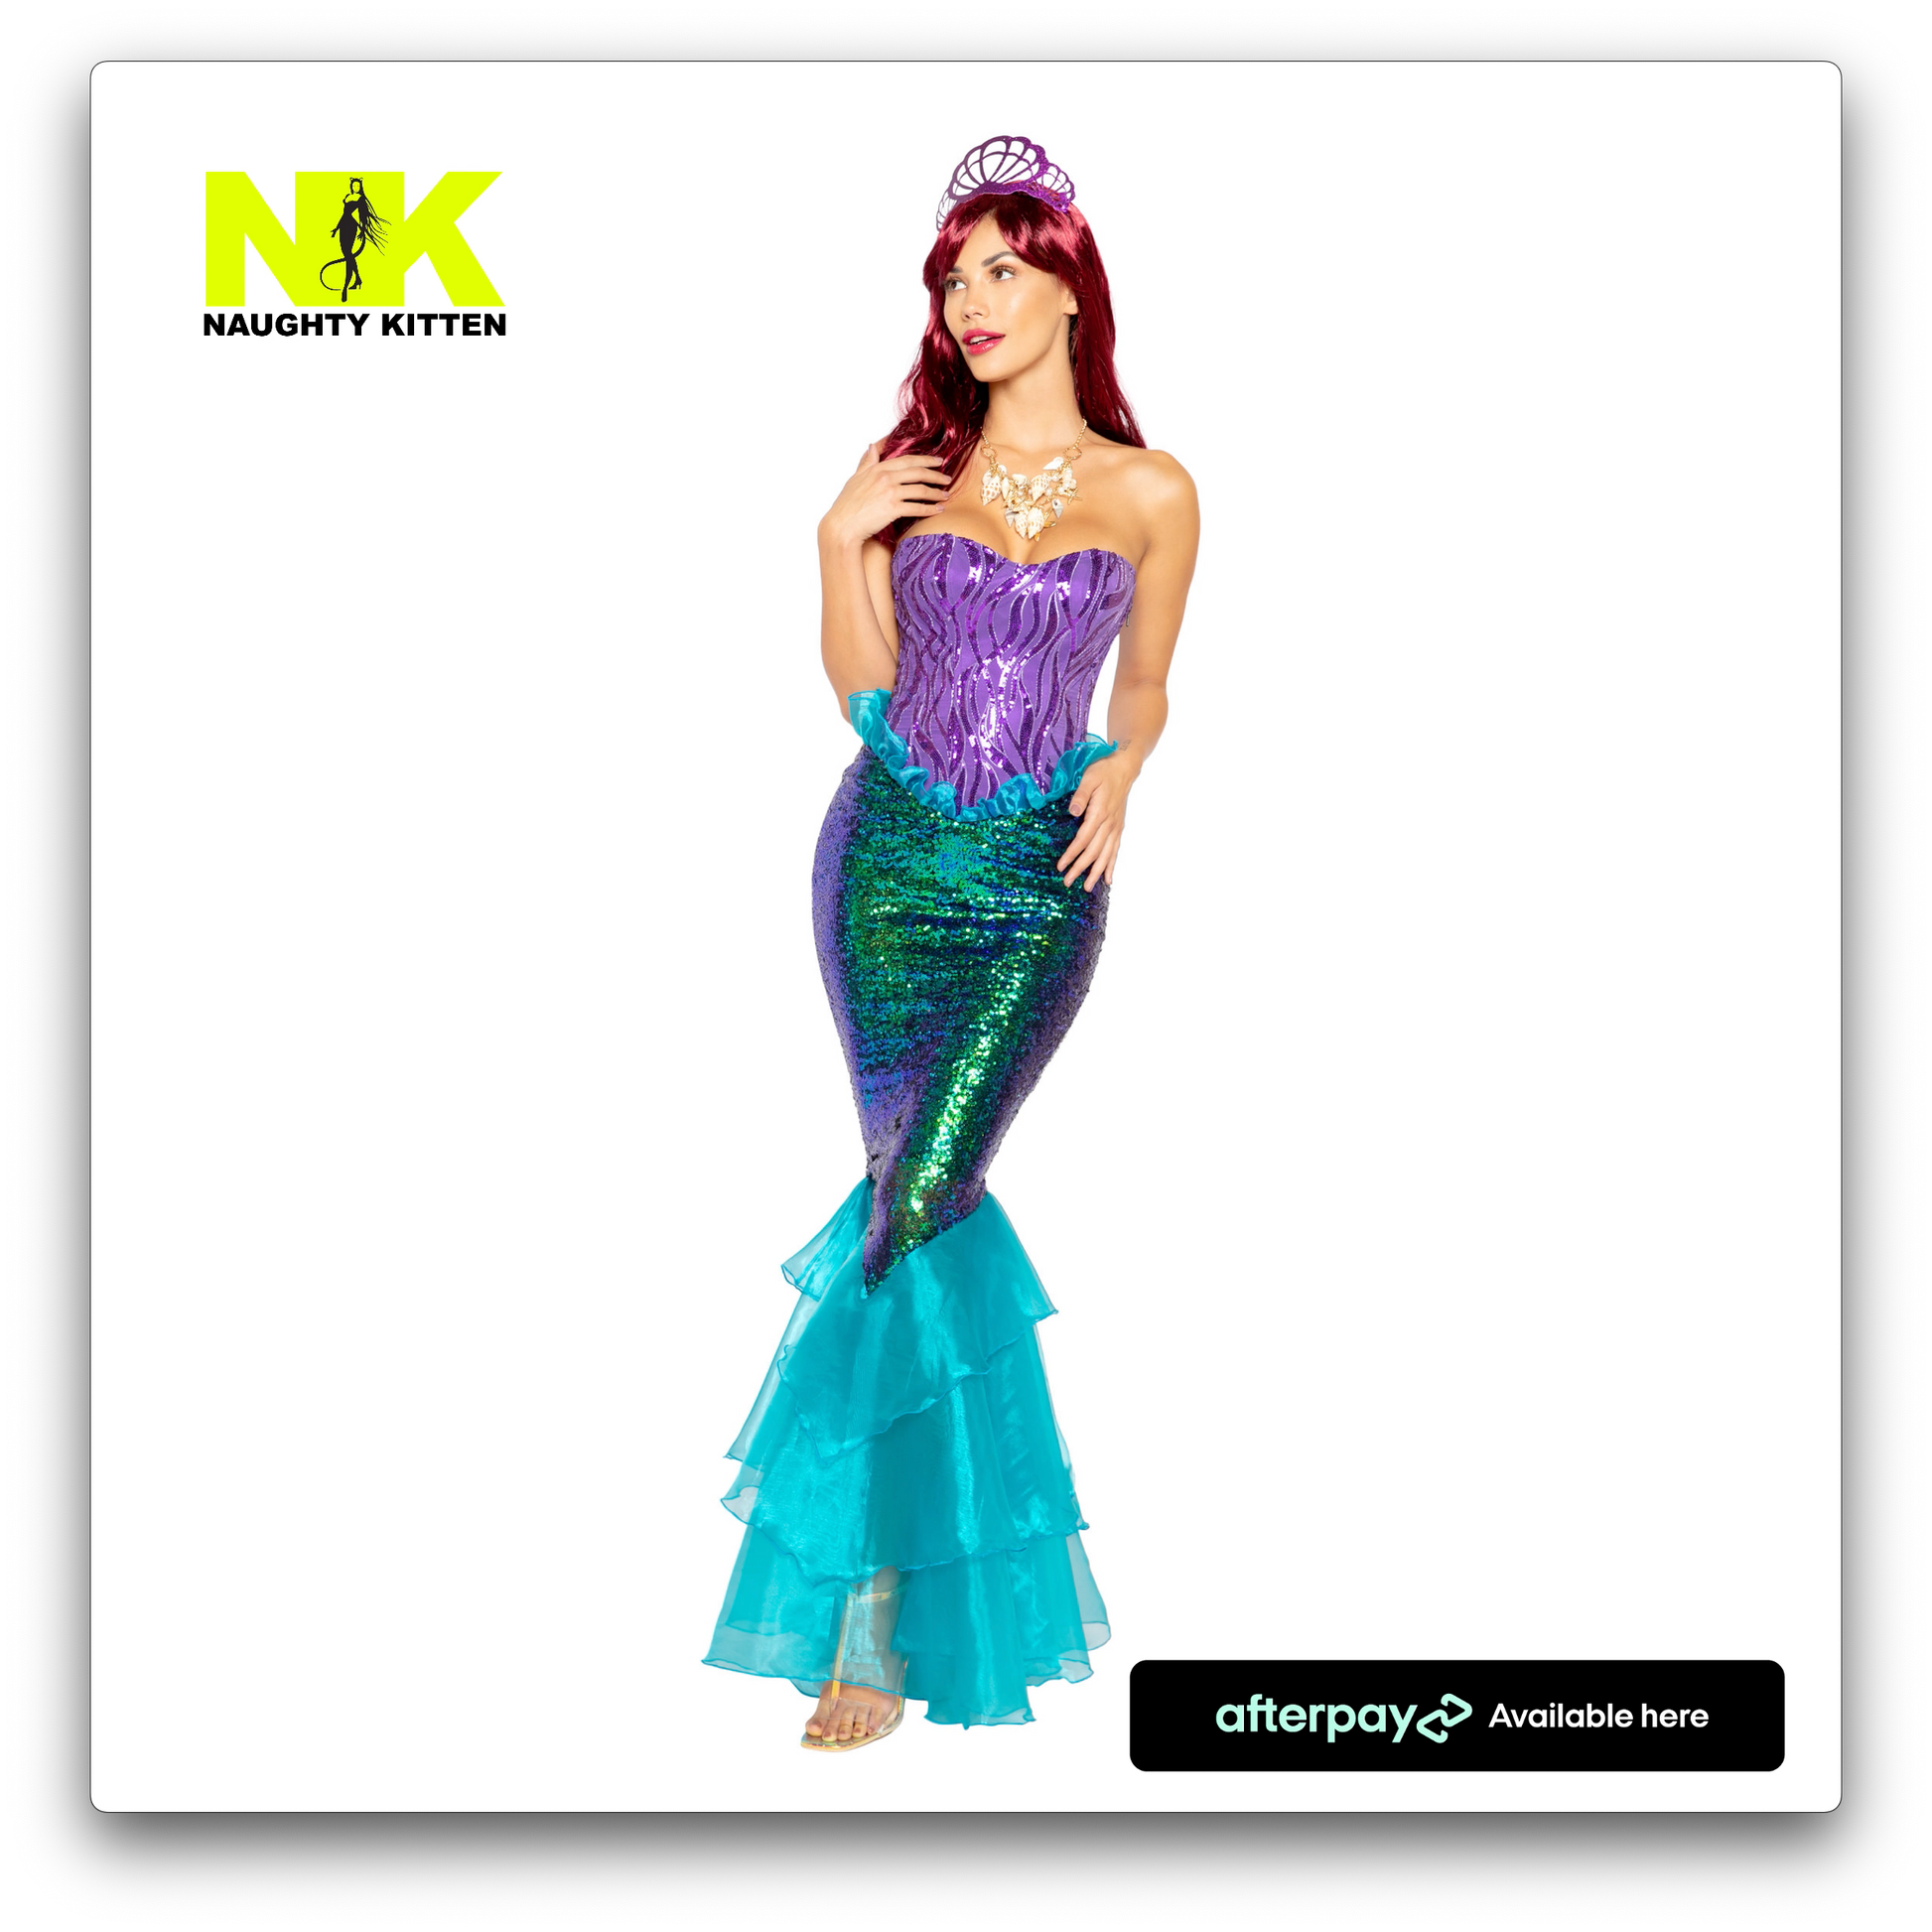 Naughty Kitten Clothing Majestic Mermaid Costume Front View Halloween Costume